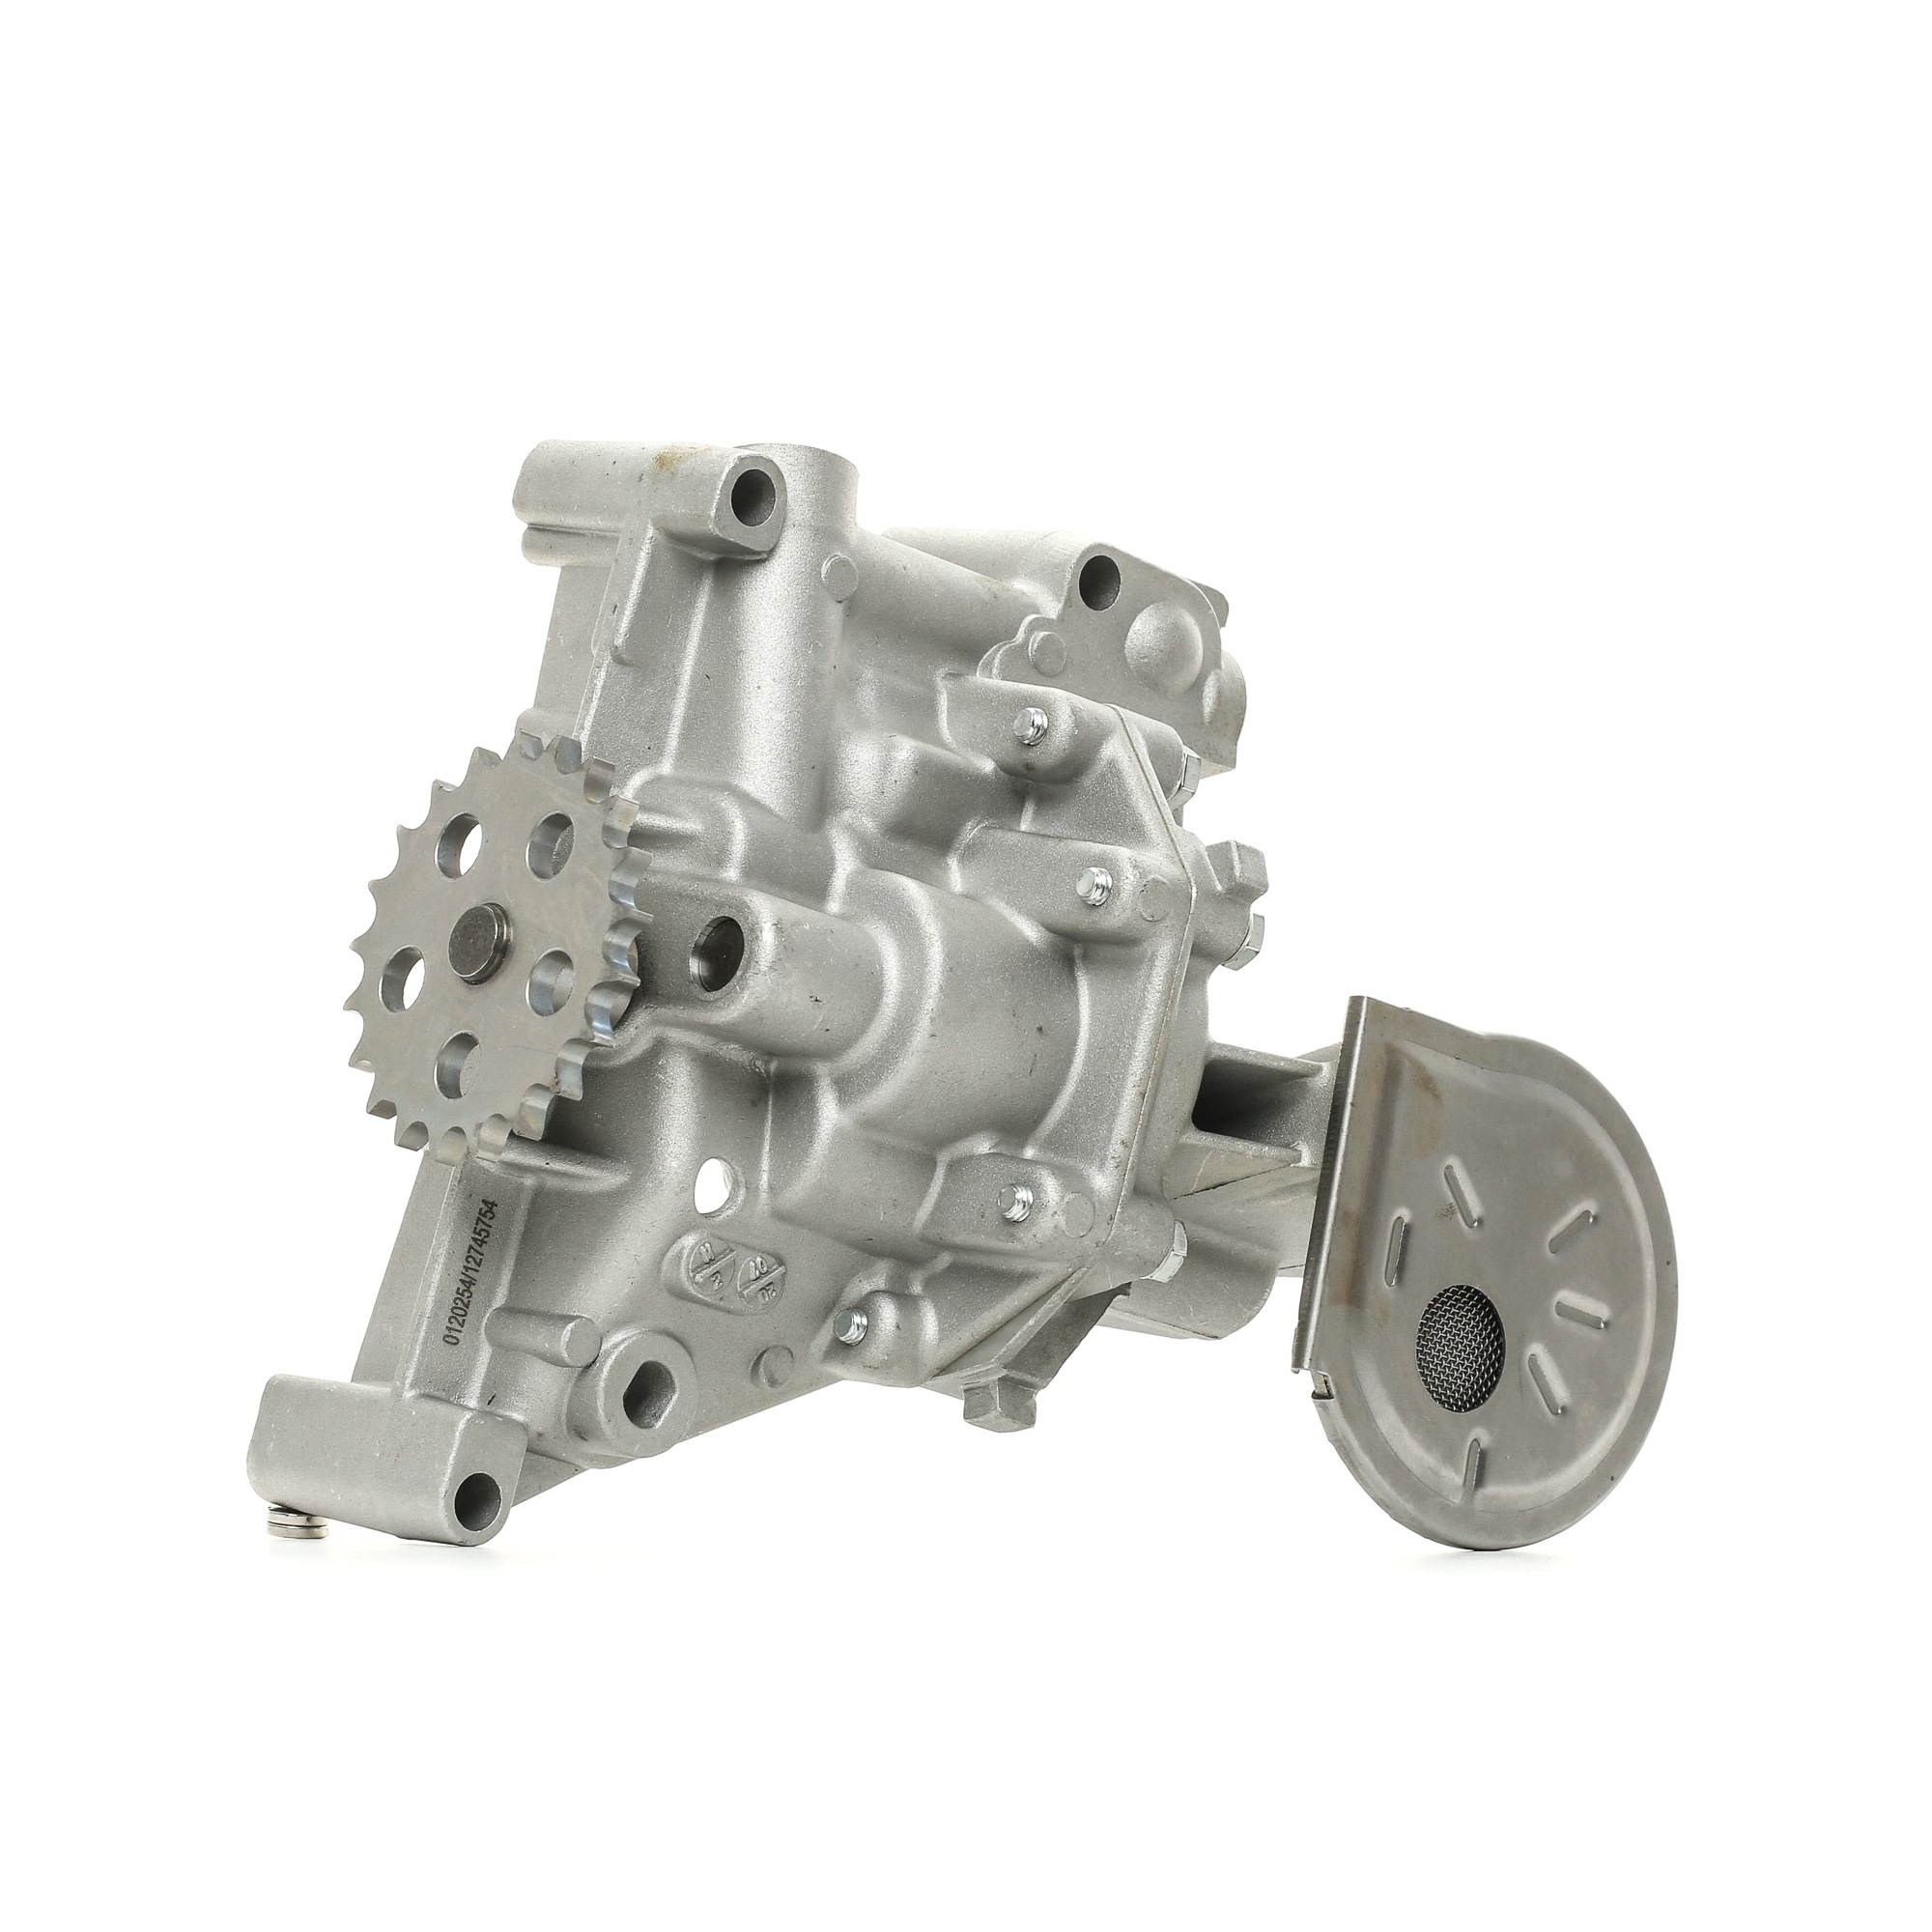 STARK SKOPM-1700030 Oil Pump with gear